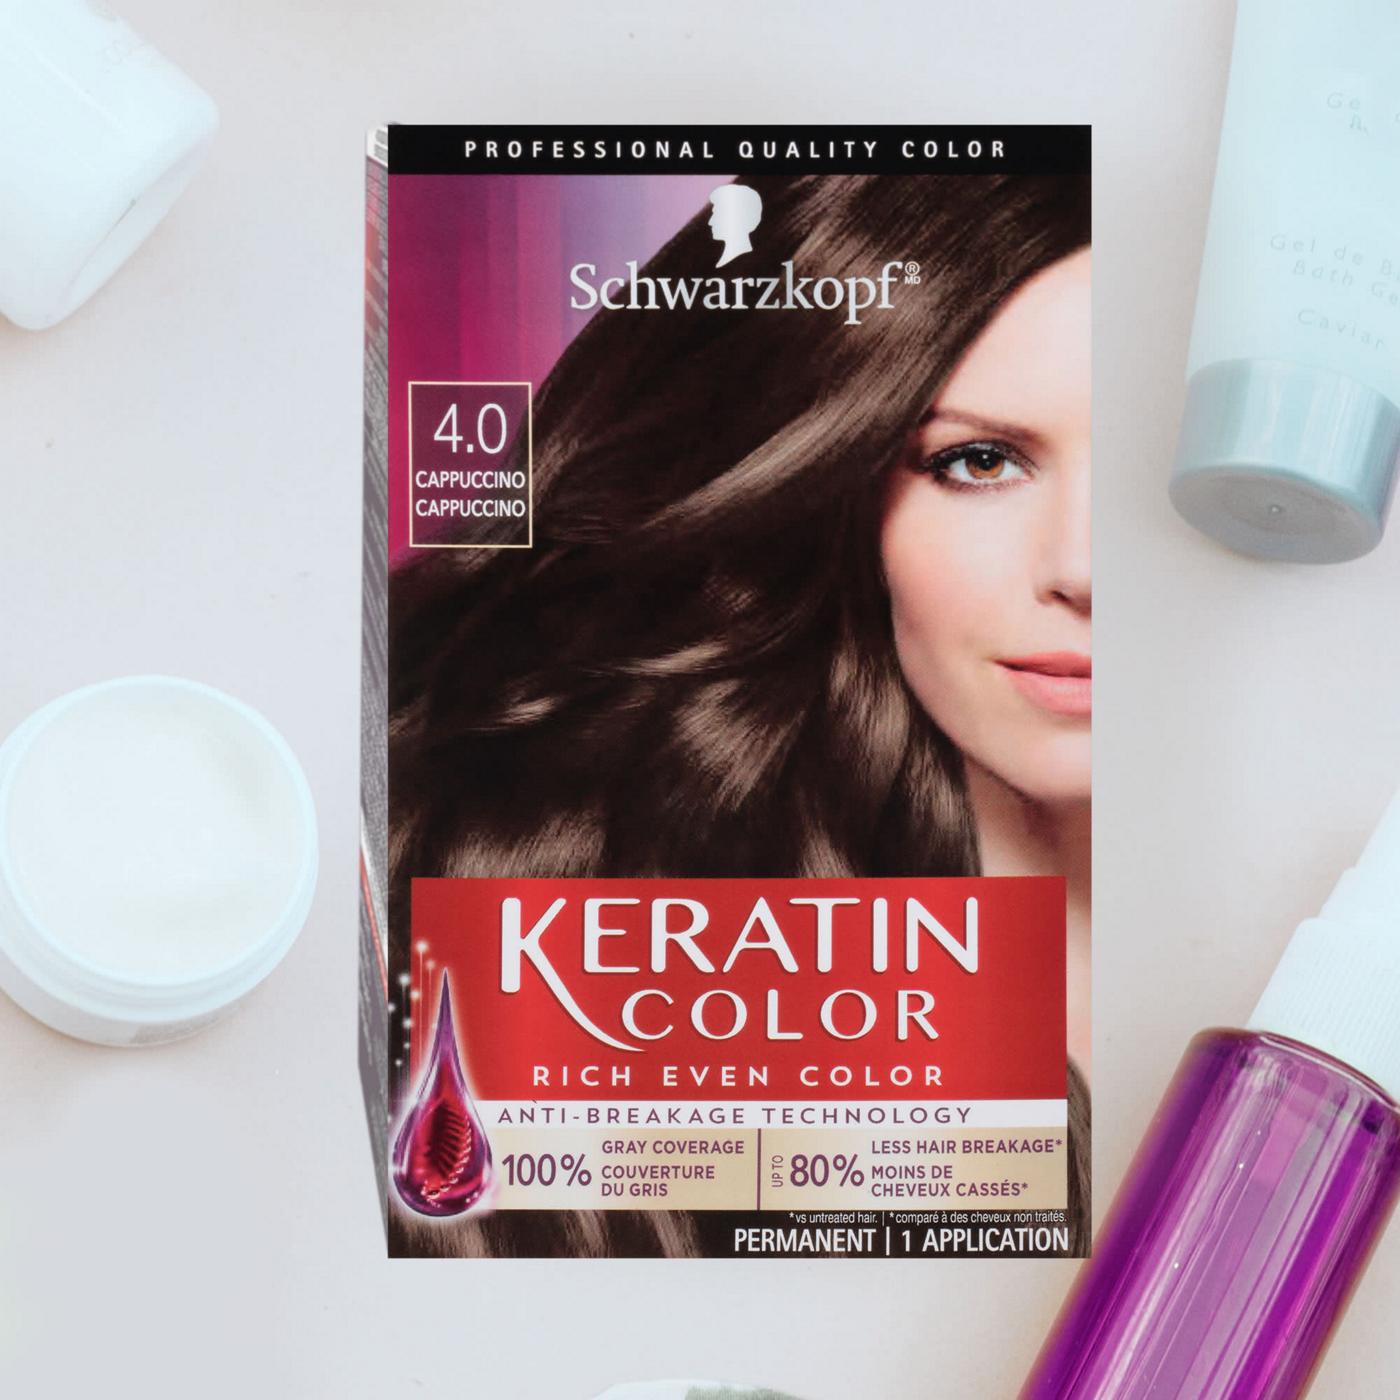 Schwarzkopf Keratin Color Permanent Hair Color Cream, 4.0 Cappuccino; image 6 of 6